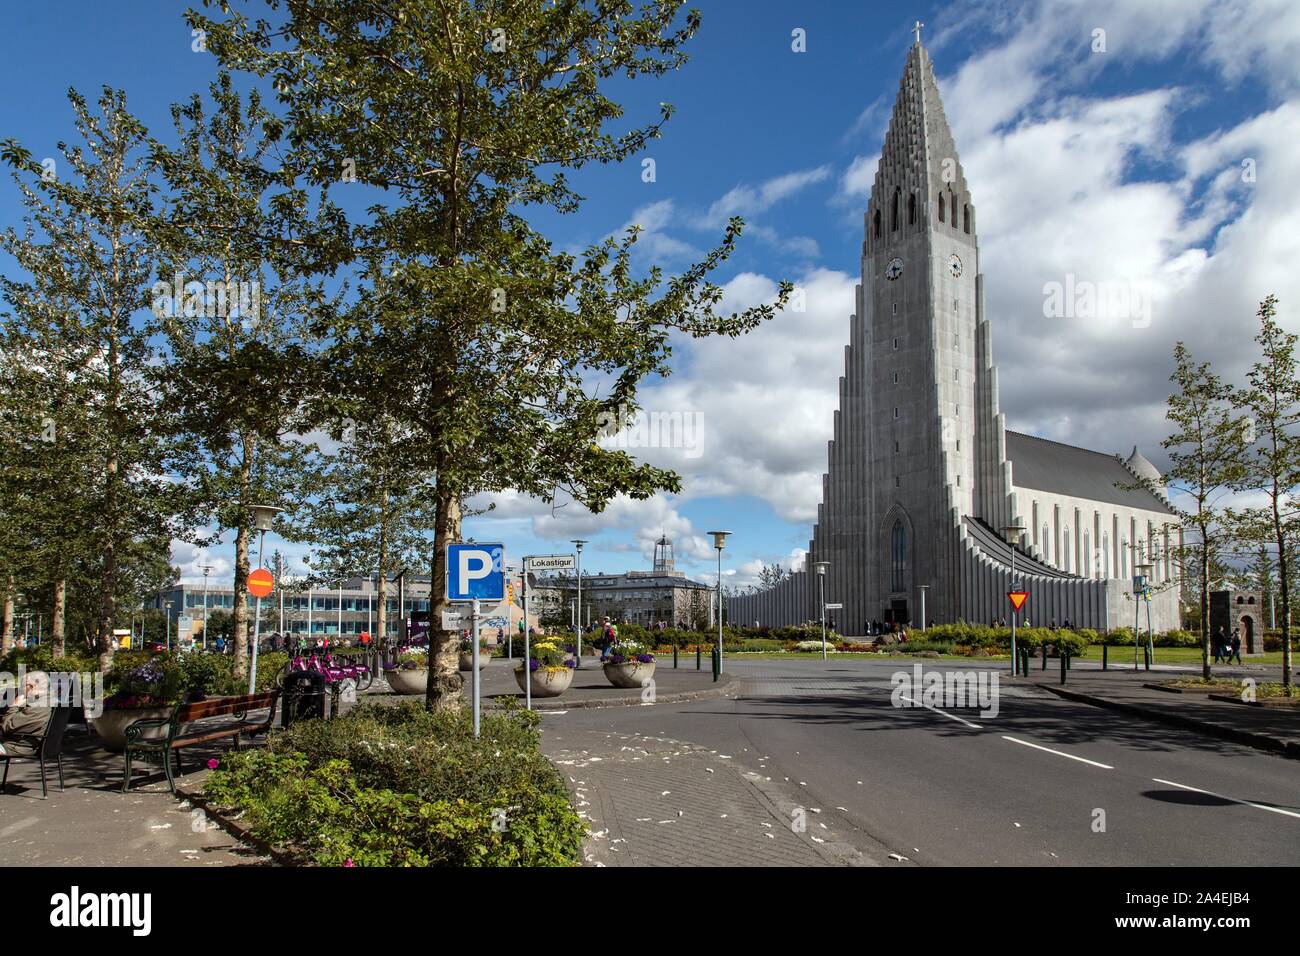 La Catedral moderna de HALLGRIMSKIRKJA, Reykjavik, Iceland Foto de stock